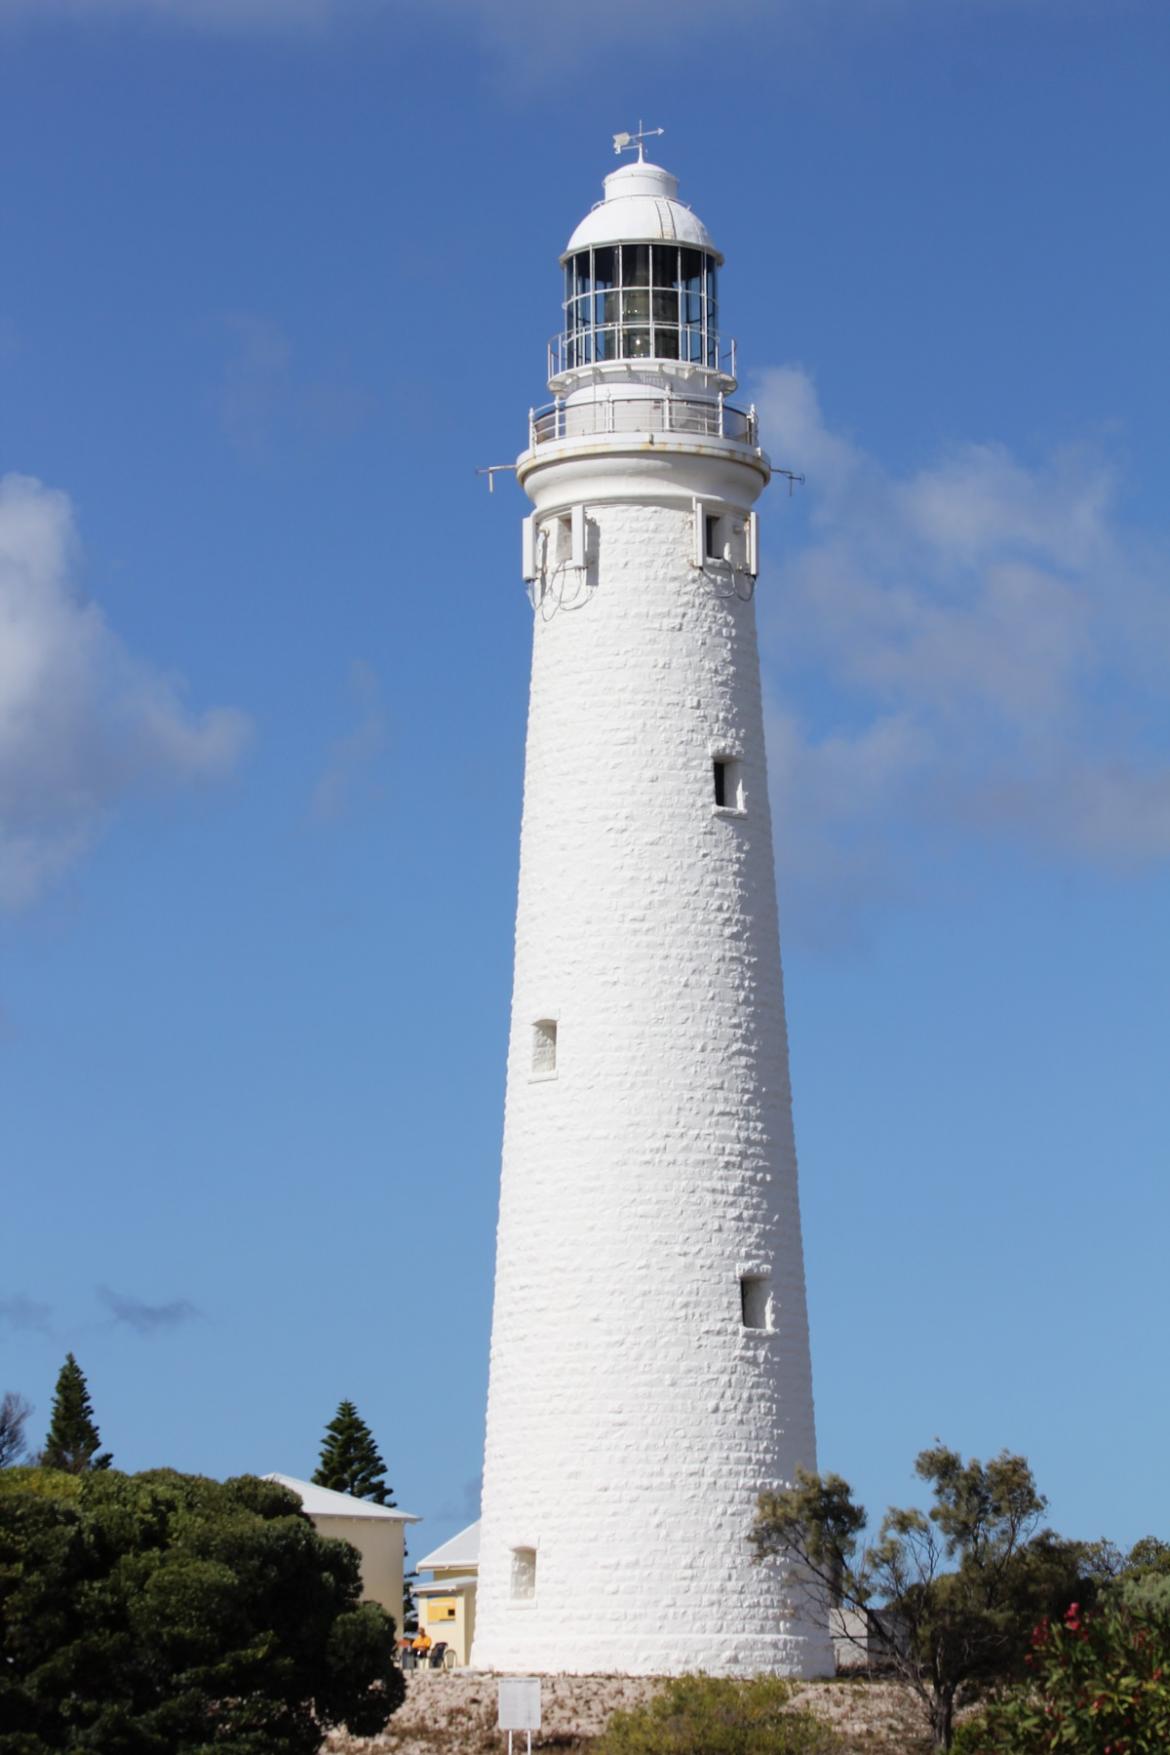 Figure 17. Rottnest Island Lighthouse. Photo source: AMSA, 2017